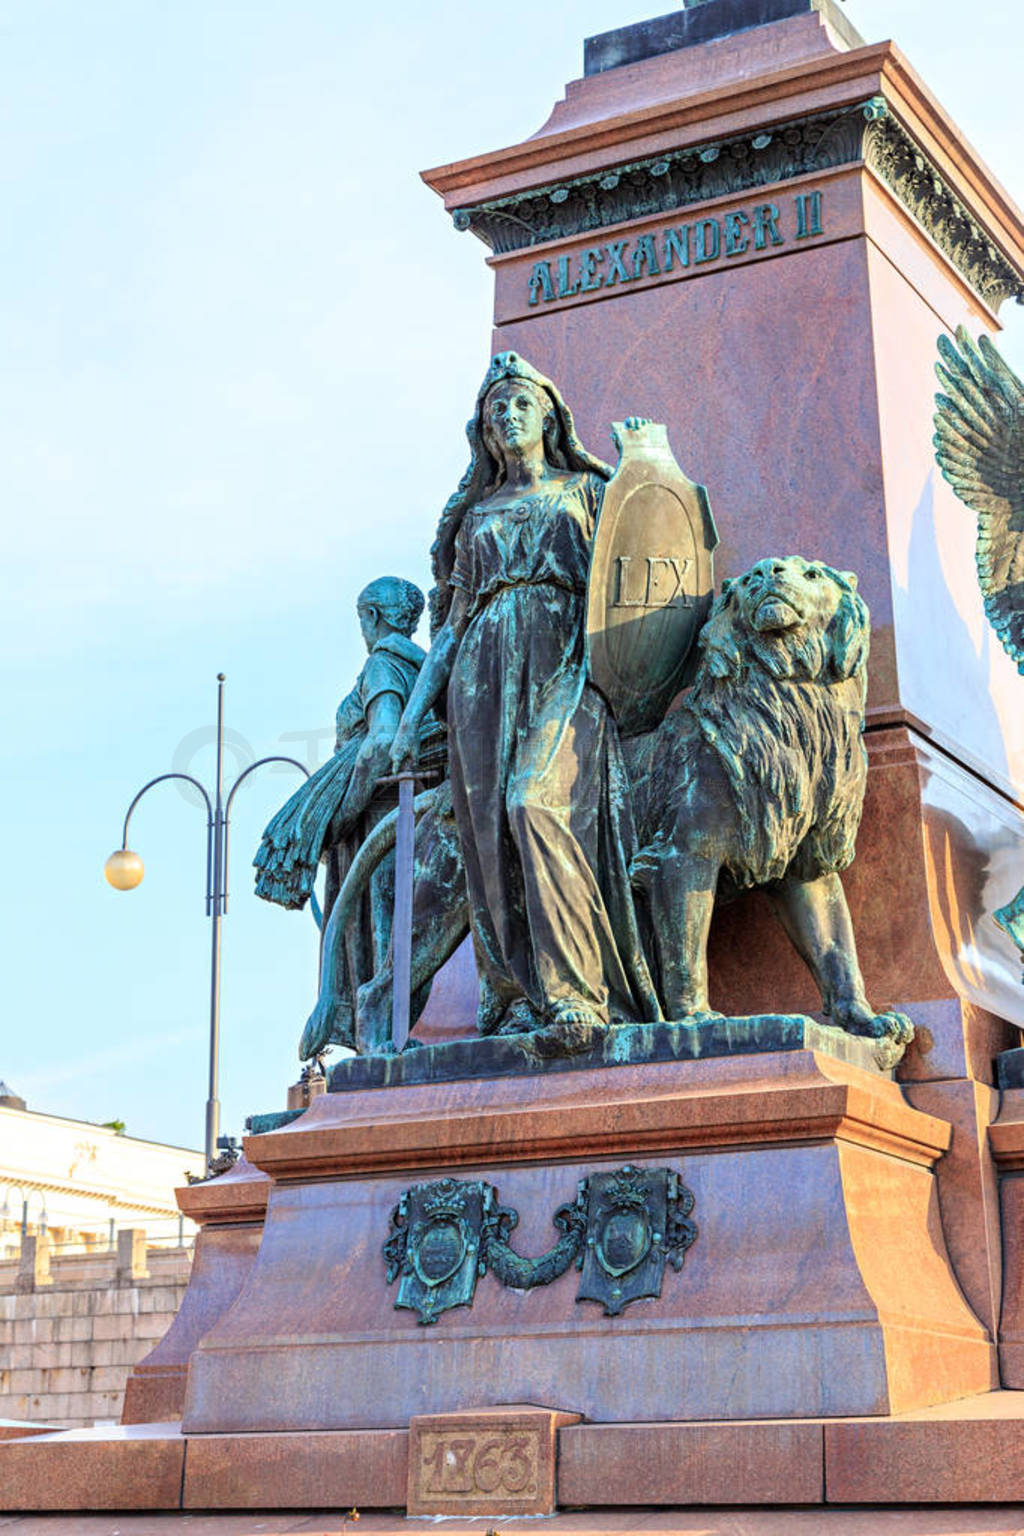 Helsinki, Finland. Monument to Alexander II was opened in 1894,